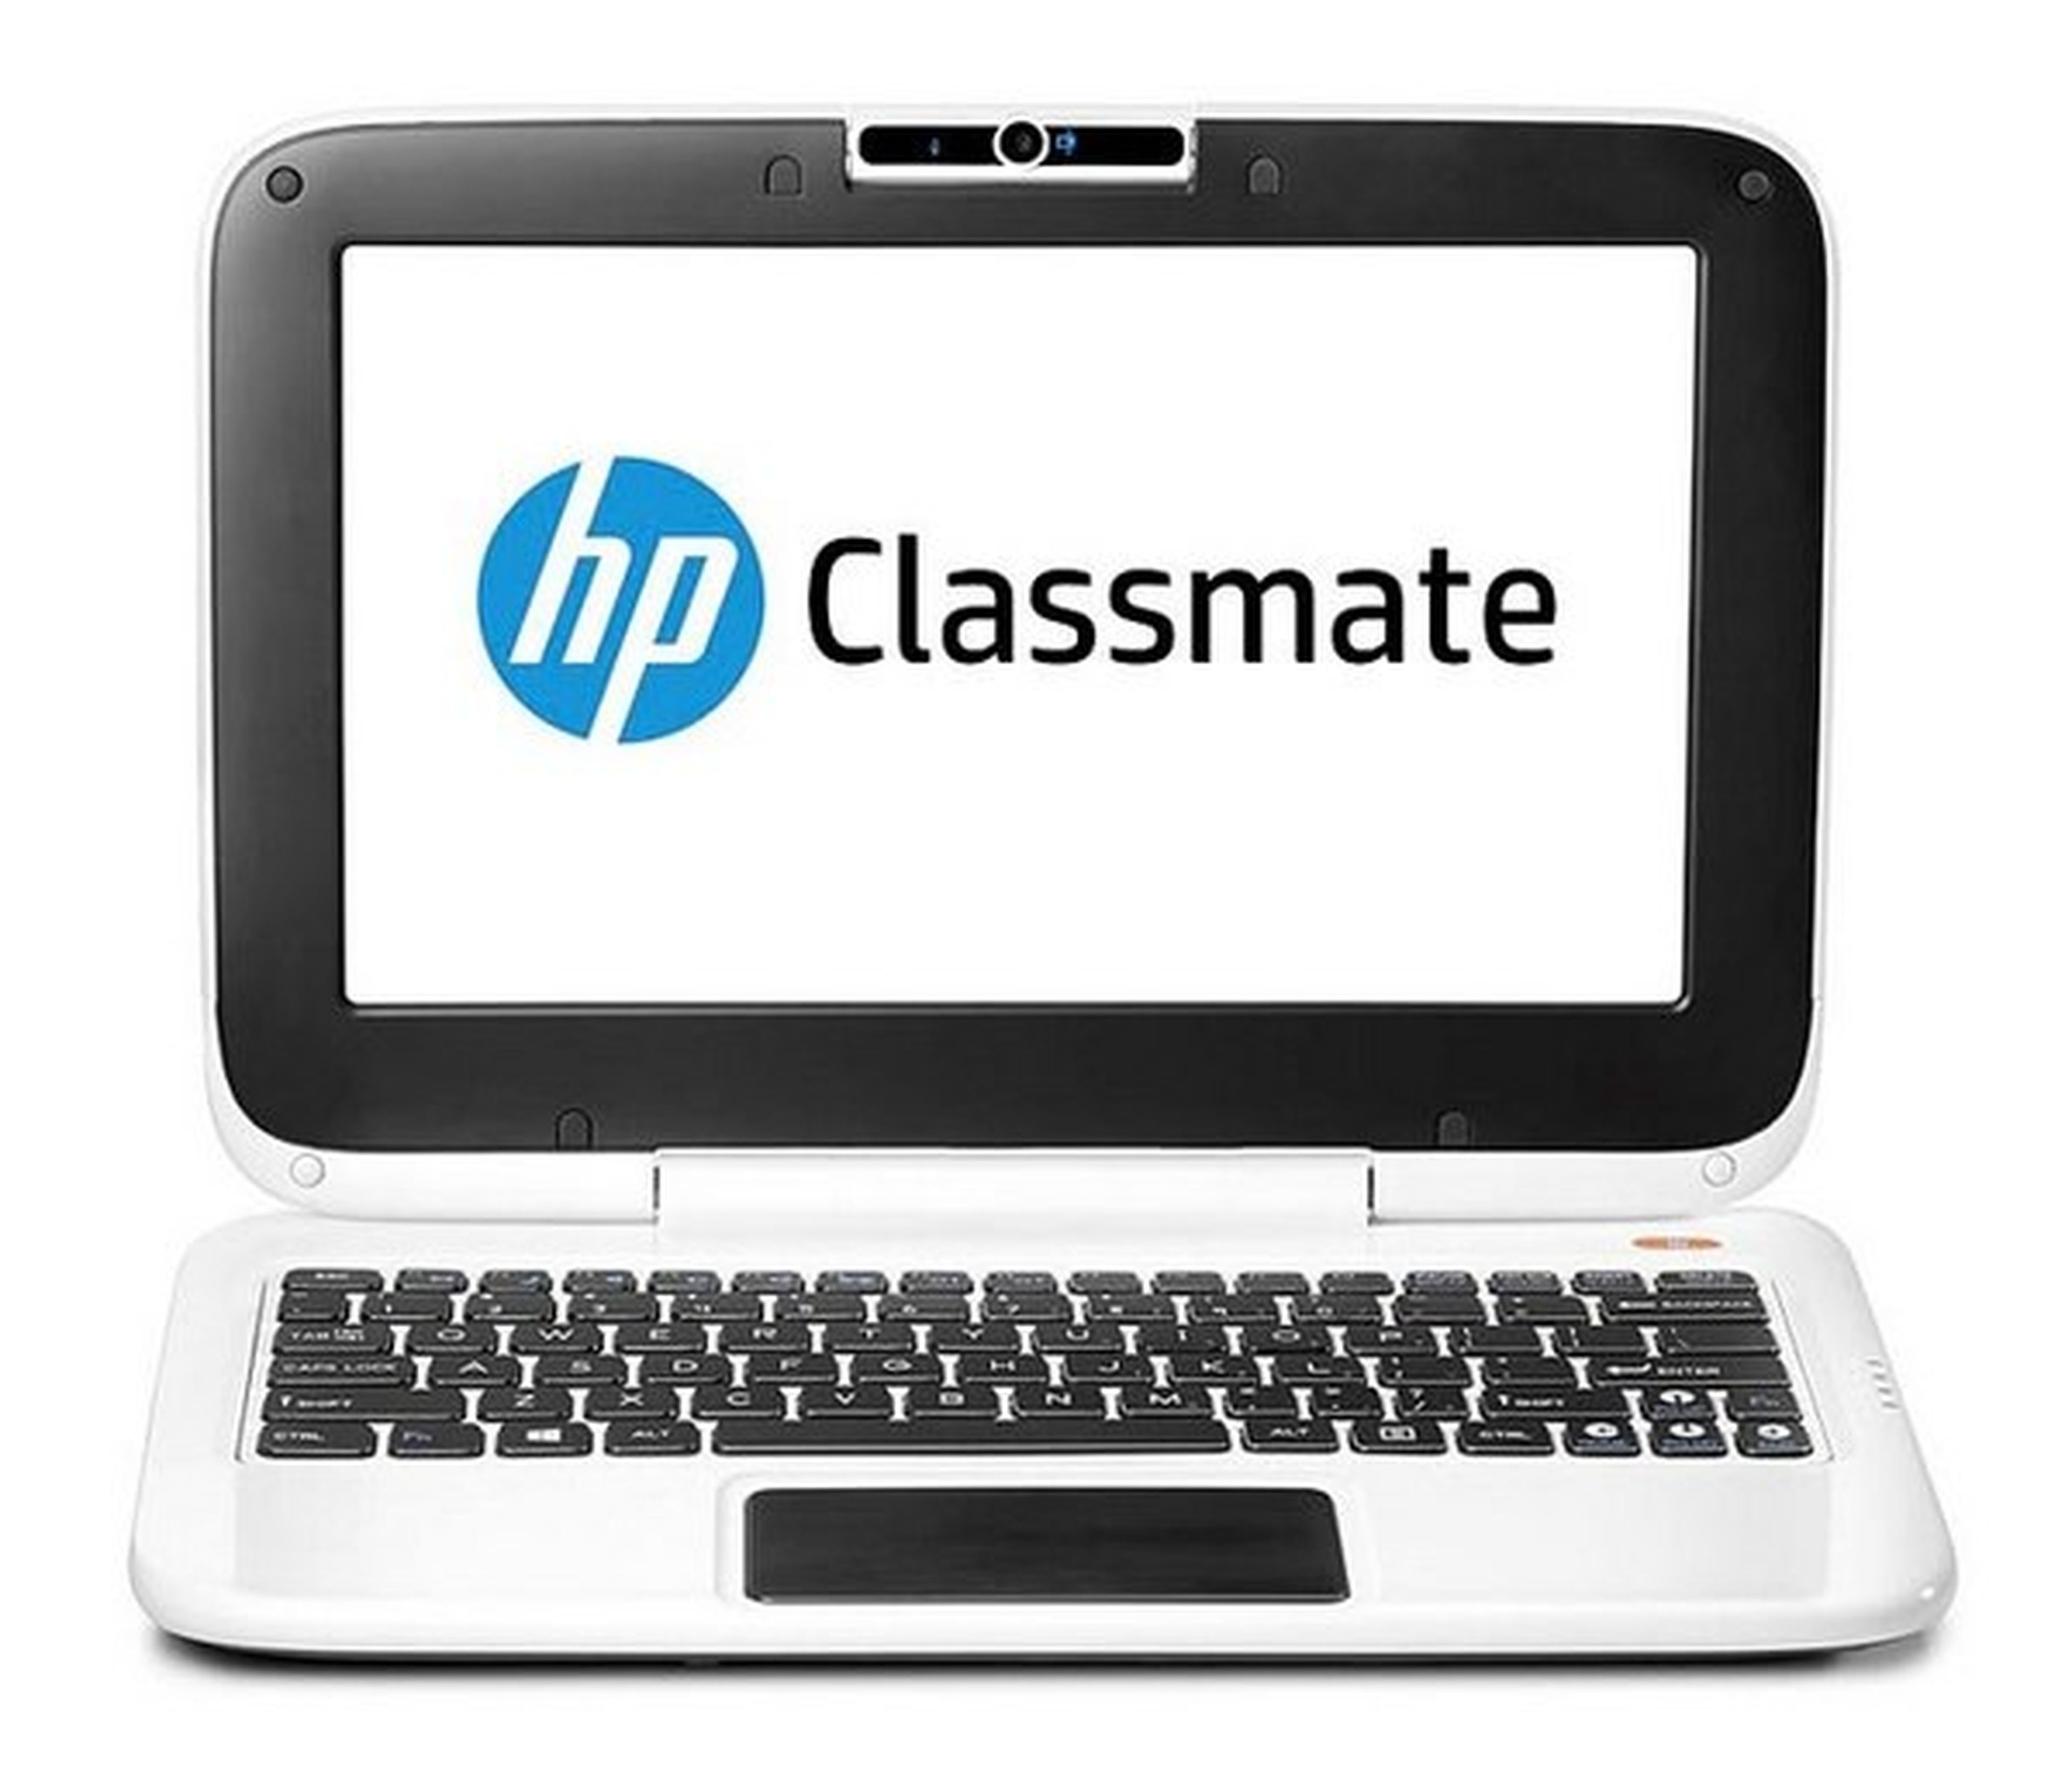 HP Classmate 10